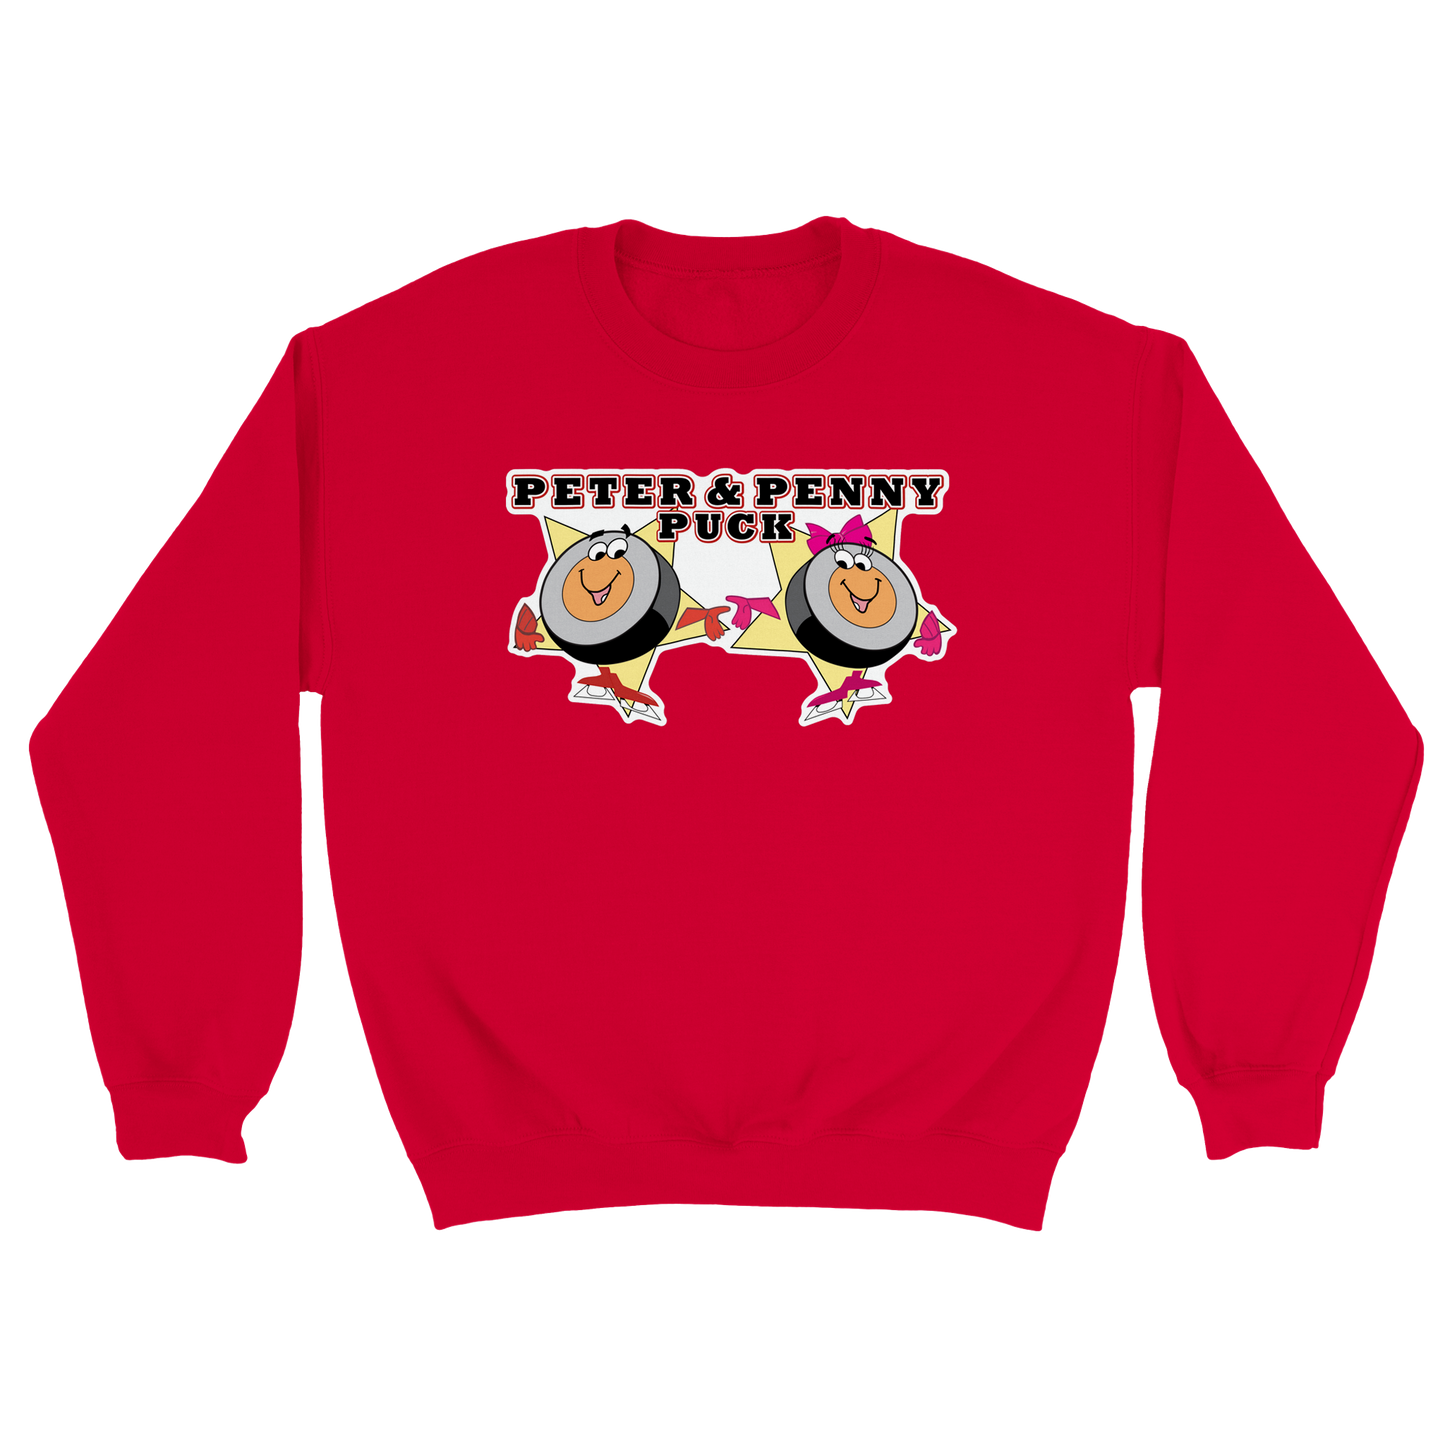 Peter & Penny Vintage Mens Classic Crewneck Sweatshirt